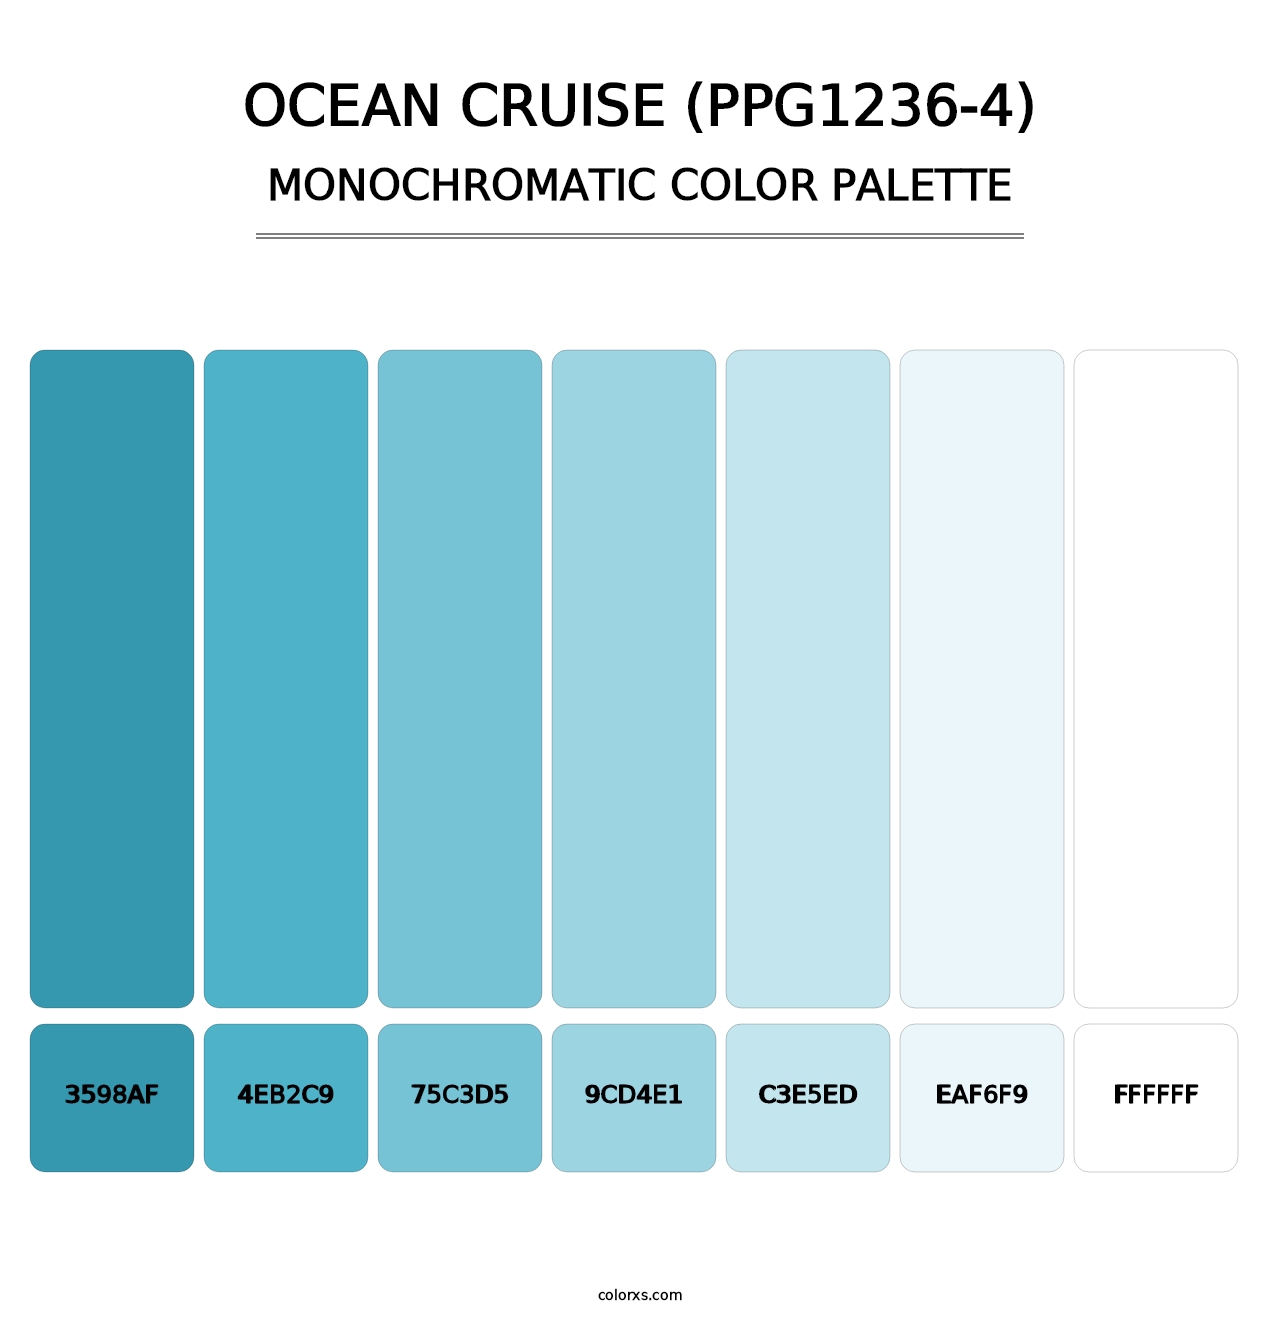 Ocean Cruise (PPG1236-4) - Monochromatic Color Palette